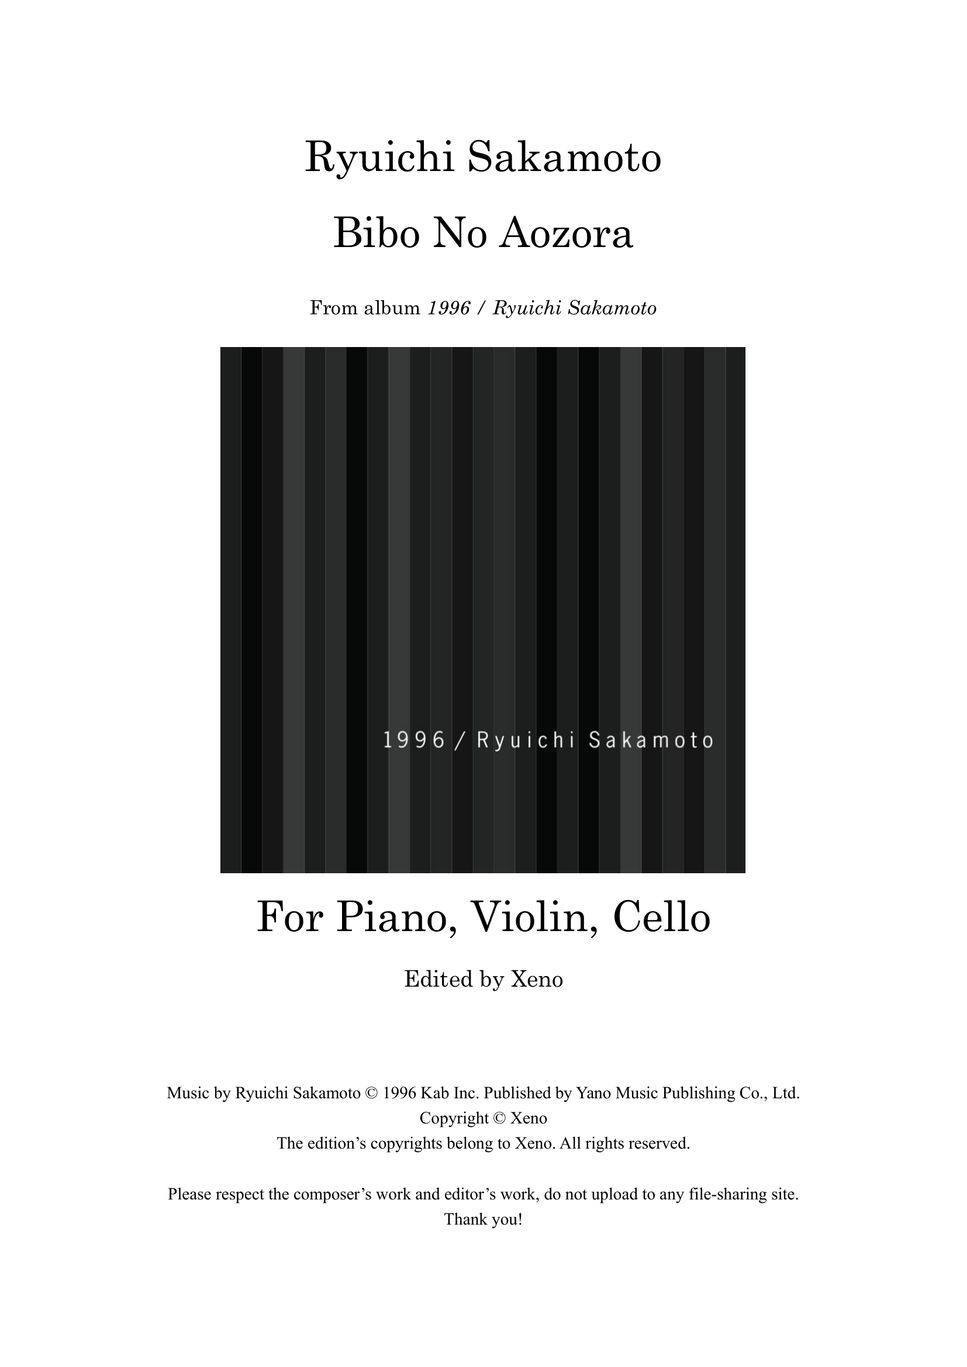 Ryuichi Sakamoto - Bibo No Aozora (Score and Parts) (Edited and